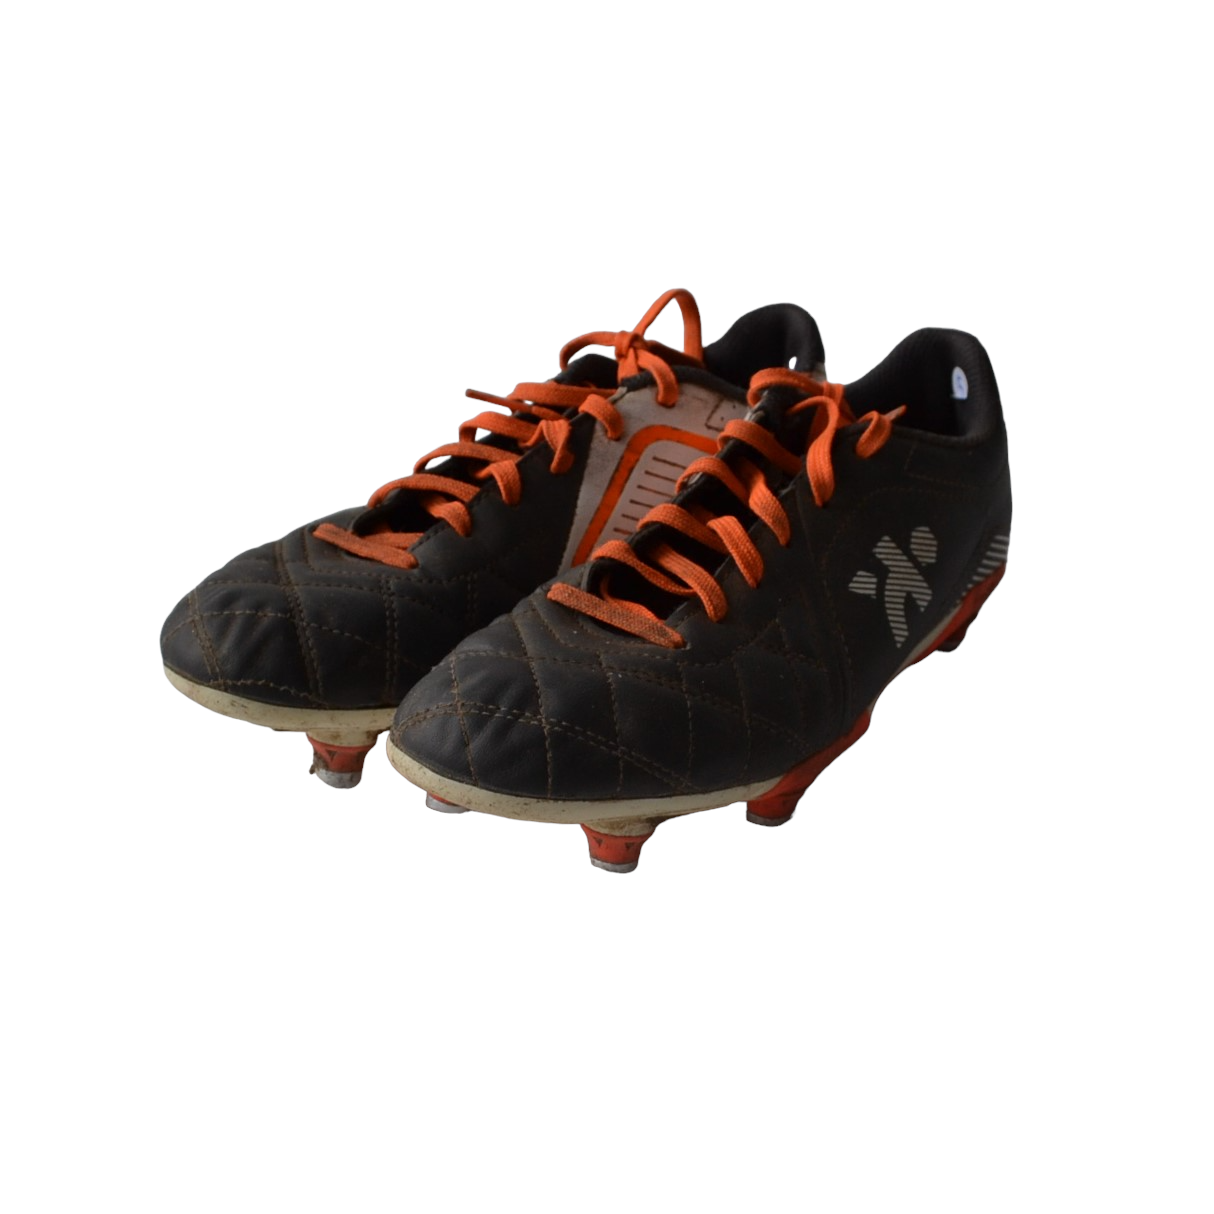 Kipsta Black and Orange Football Boots Size 5